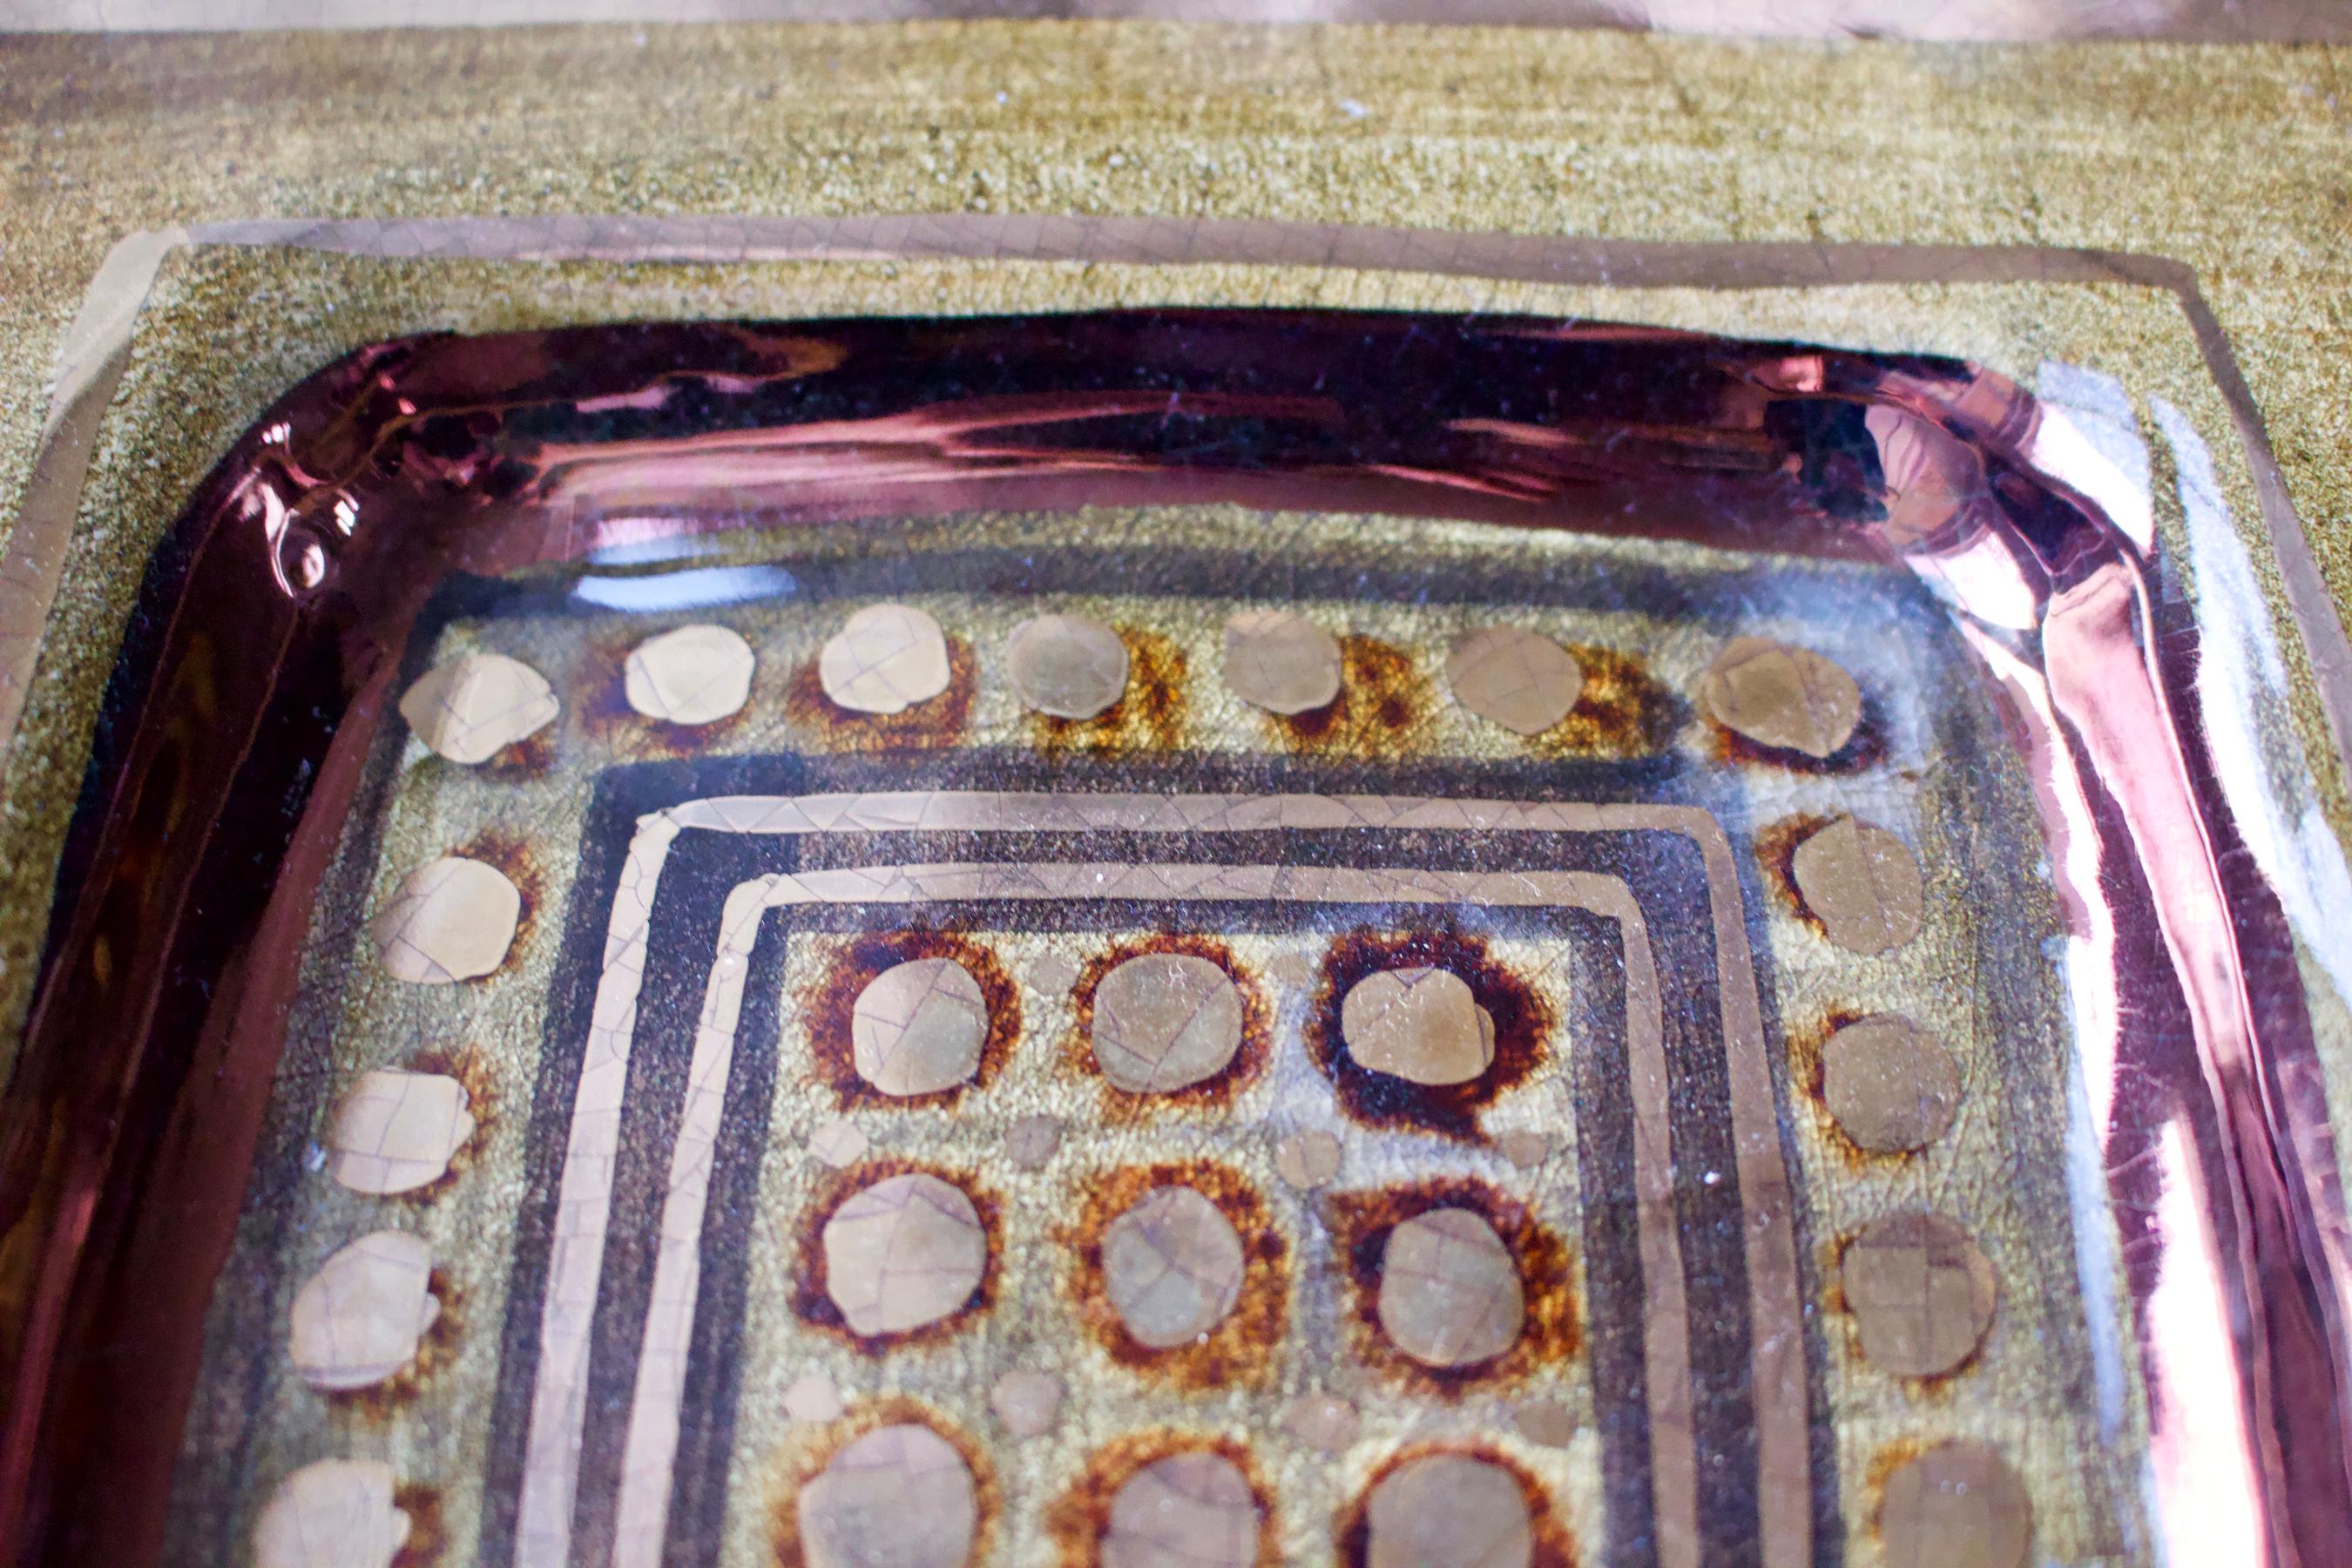 20th Century Pelletier Ceramic Vide-Poche or Decorative Plate in Deep Gold Tones, France